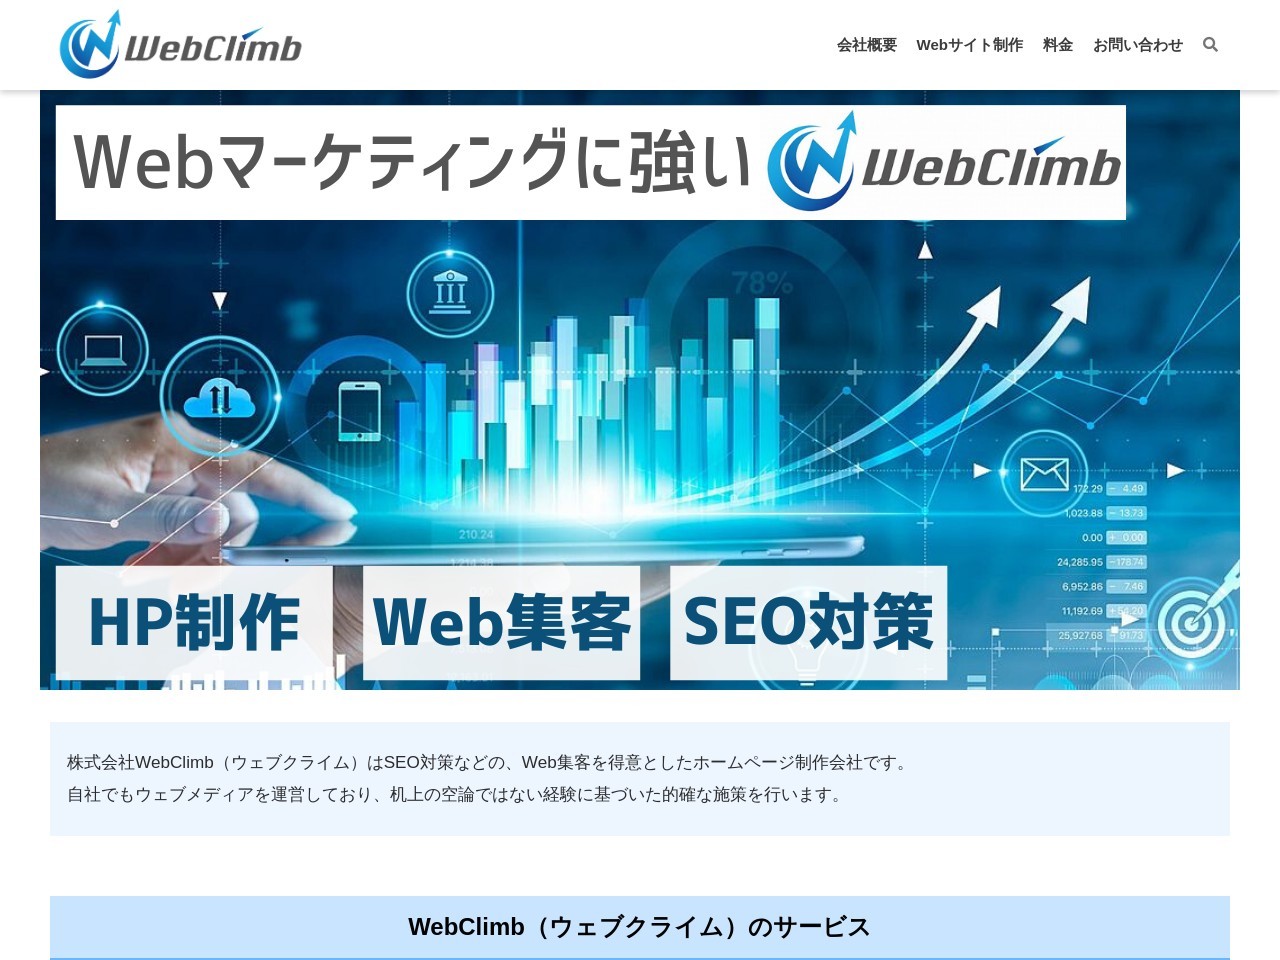 WebClimb